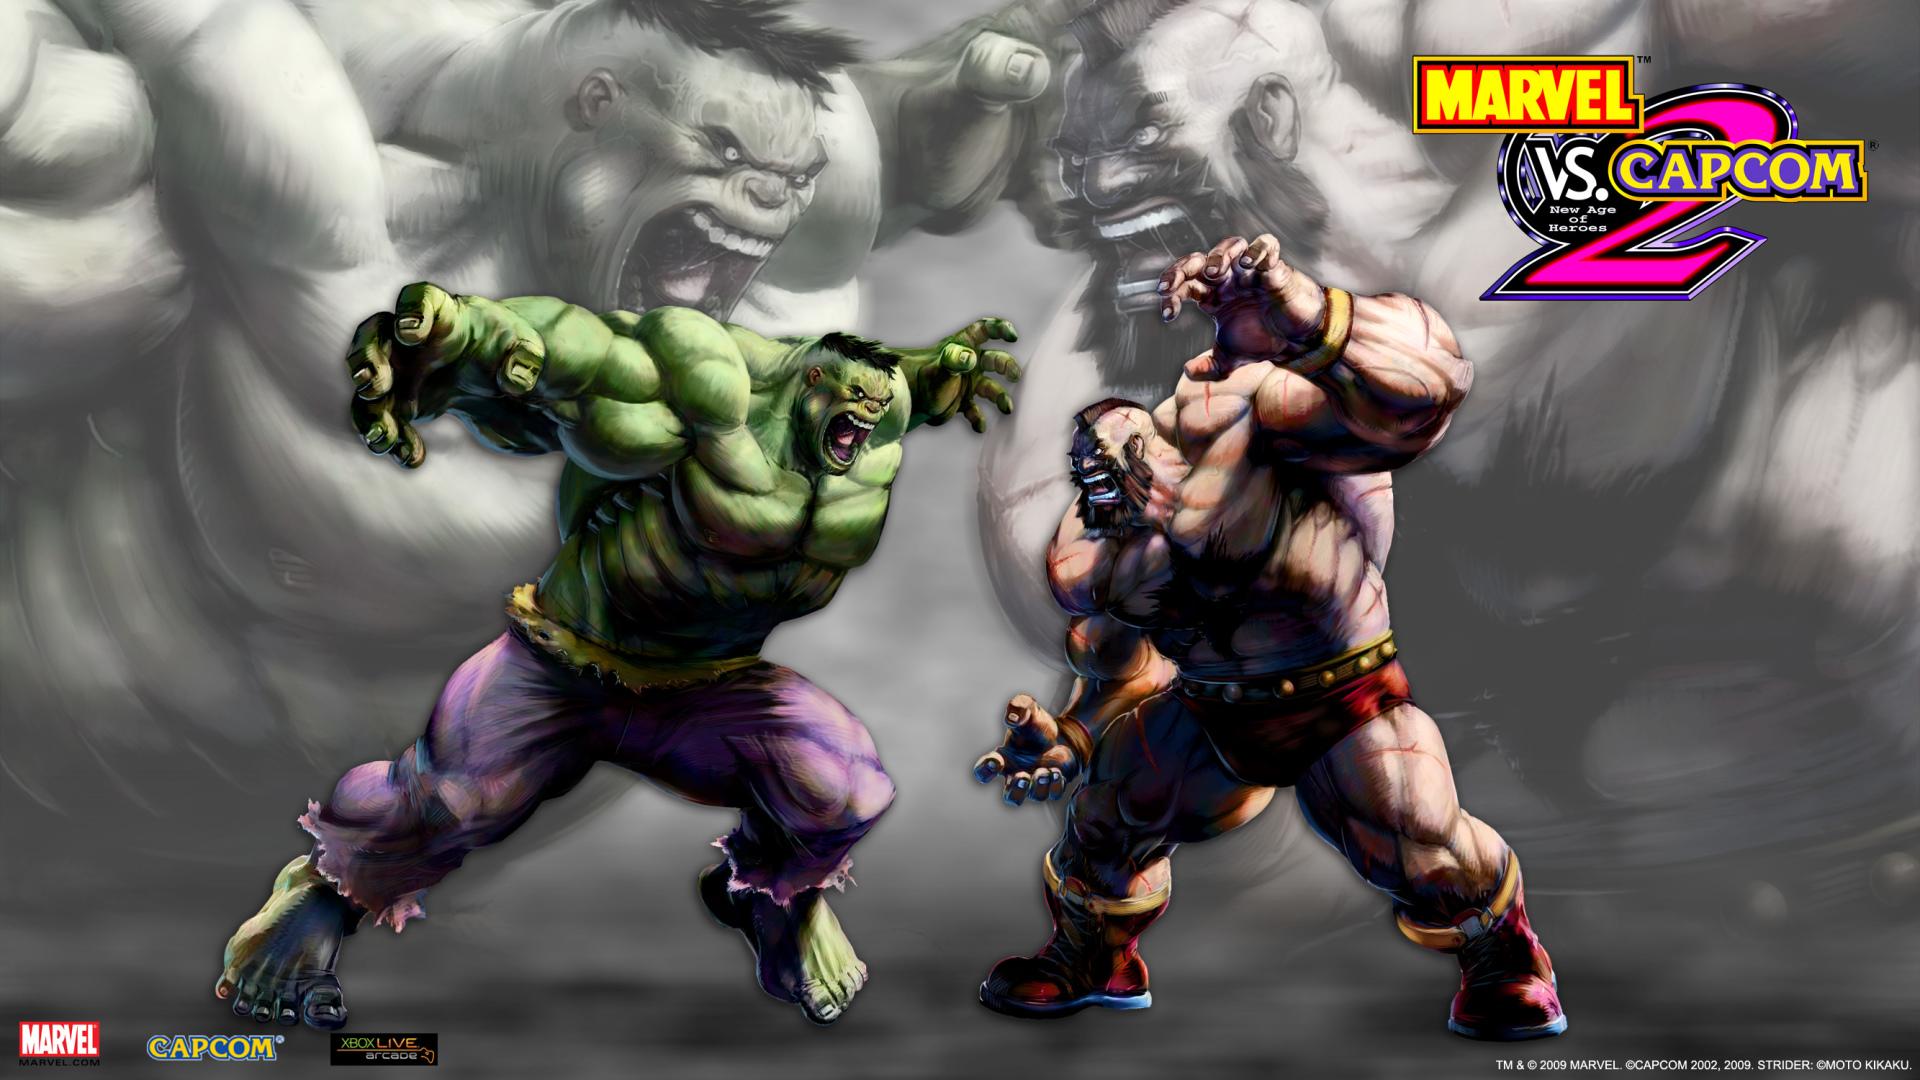 Marvel Vs. Capcom 2 at 1024 x 1024 iPad size wallpapers HD quality